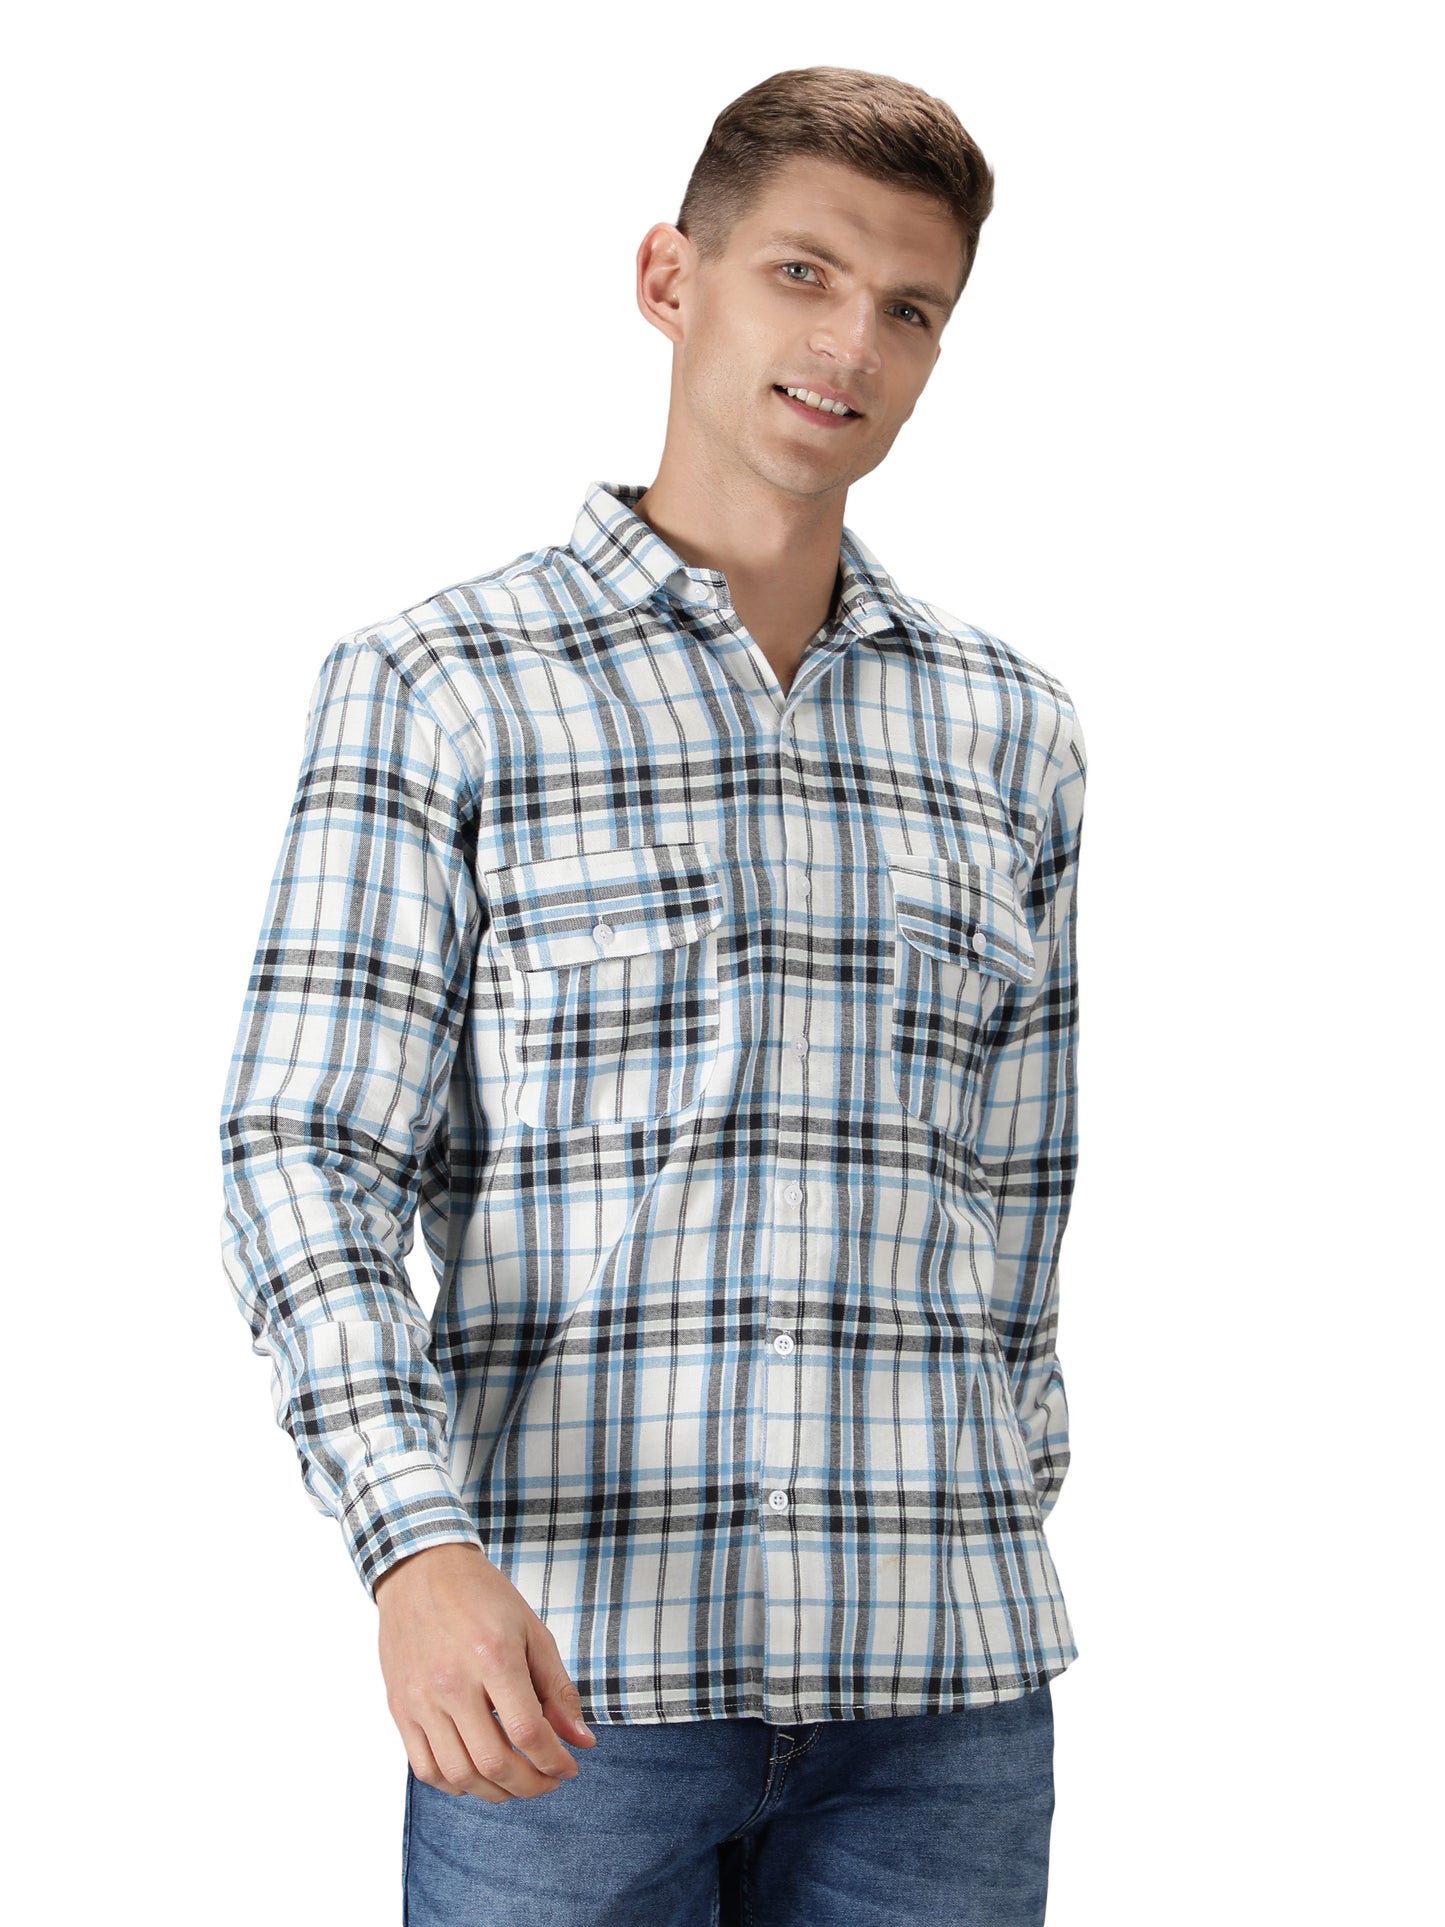 NUEVOSPORTA Pure Cotton Check Pattern Men's Full Sleeve Shirt_White/Blue